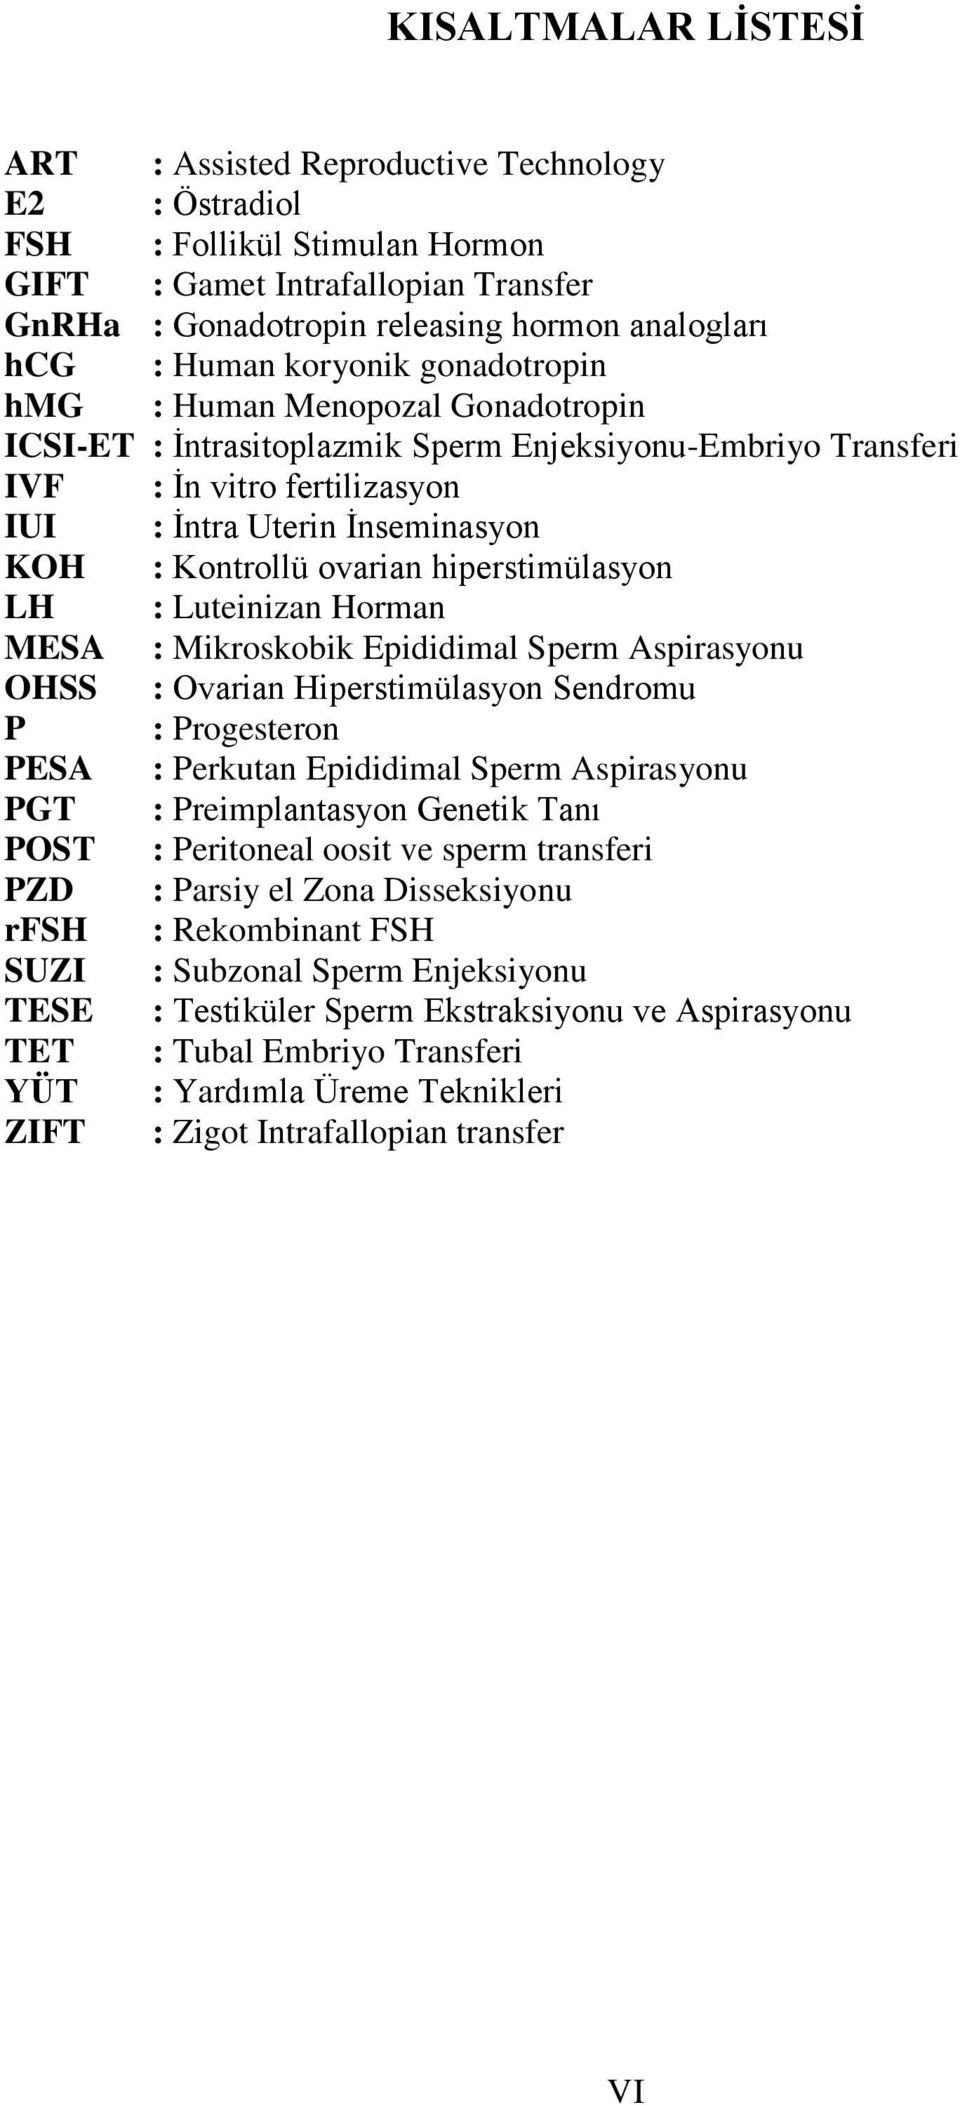 Kontrollü ovarian hiperstimülasyon LH : Luteinizan Horman MESA : Mikroskobik Epididimal Sperm Aspirasyonu OHSS : Ovarian Hiperstimülasyon Sendromu P : Progesteron PESA : Perkutan Epididimal Sperm